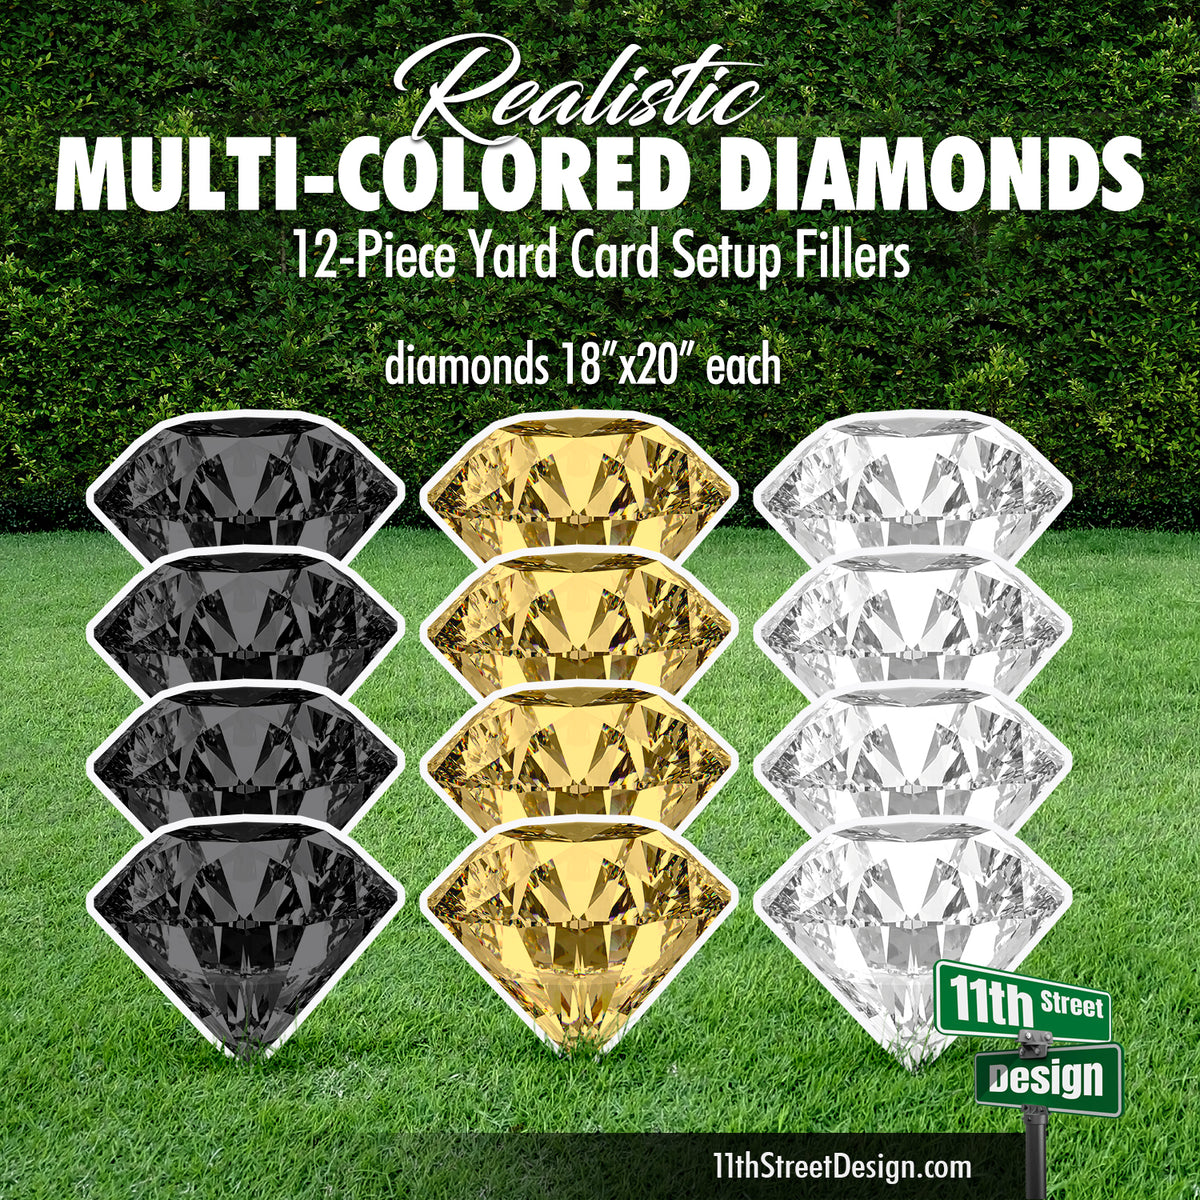 Realistic Colored Diamonds Black Gold White - Yard Card Setup Fillers